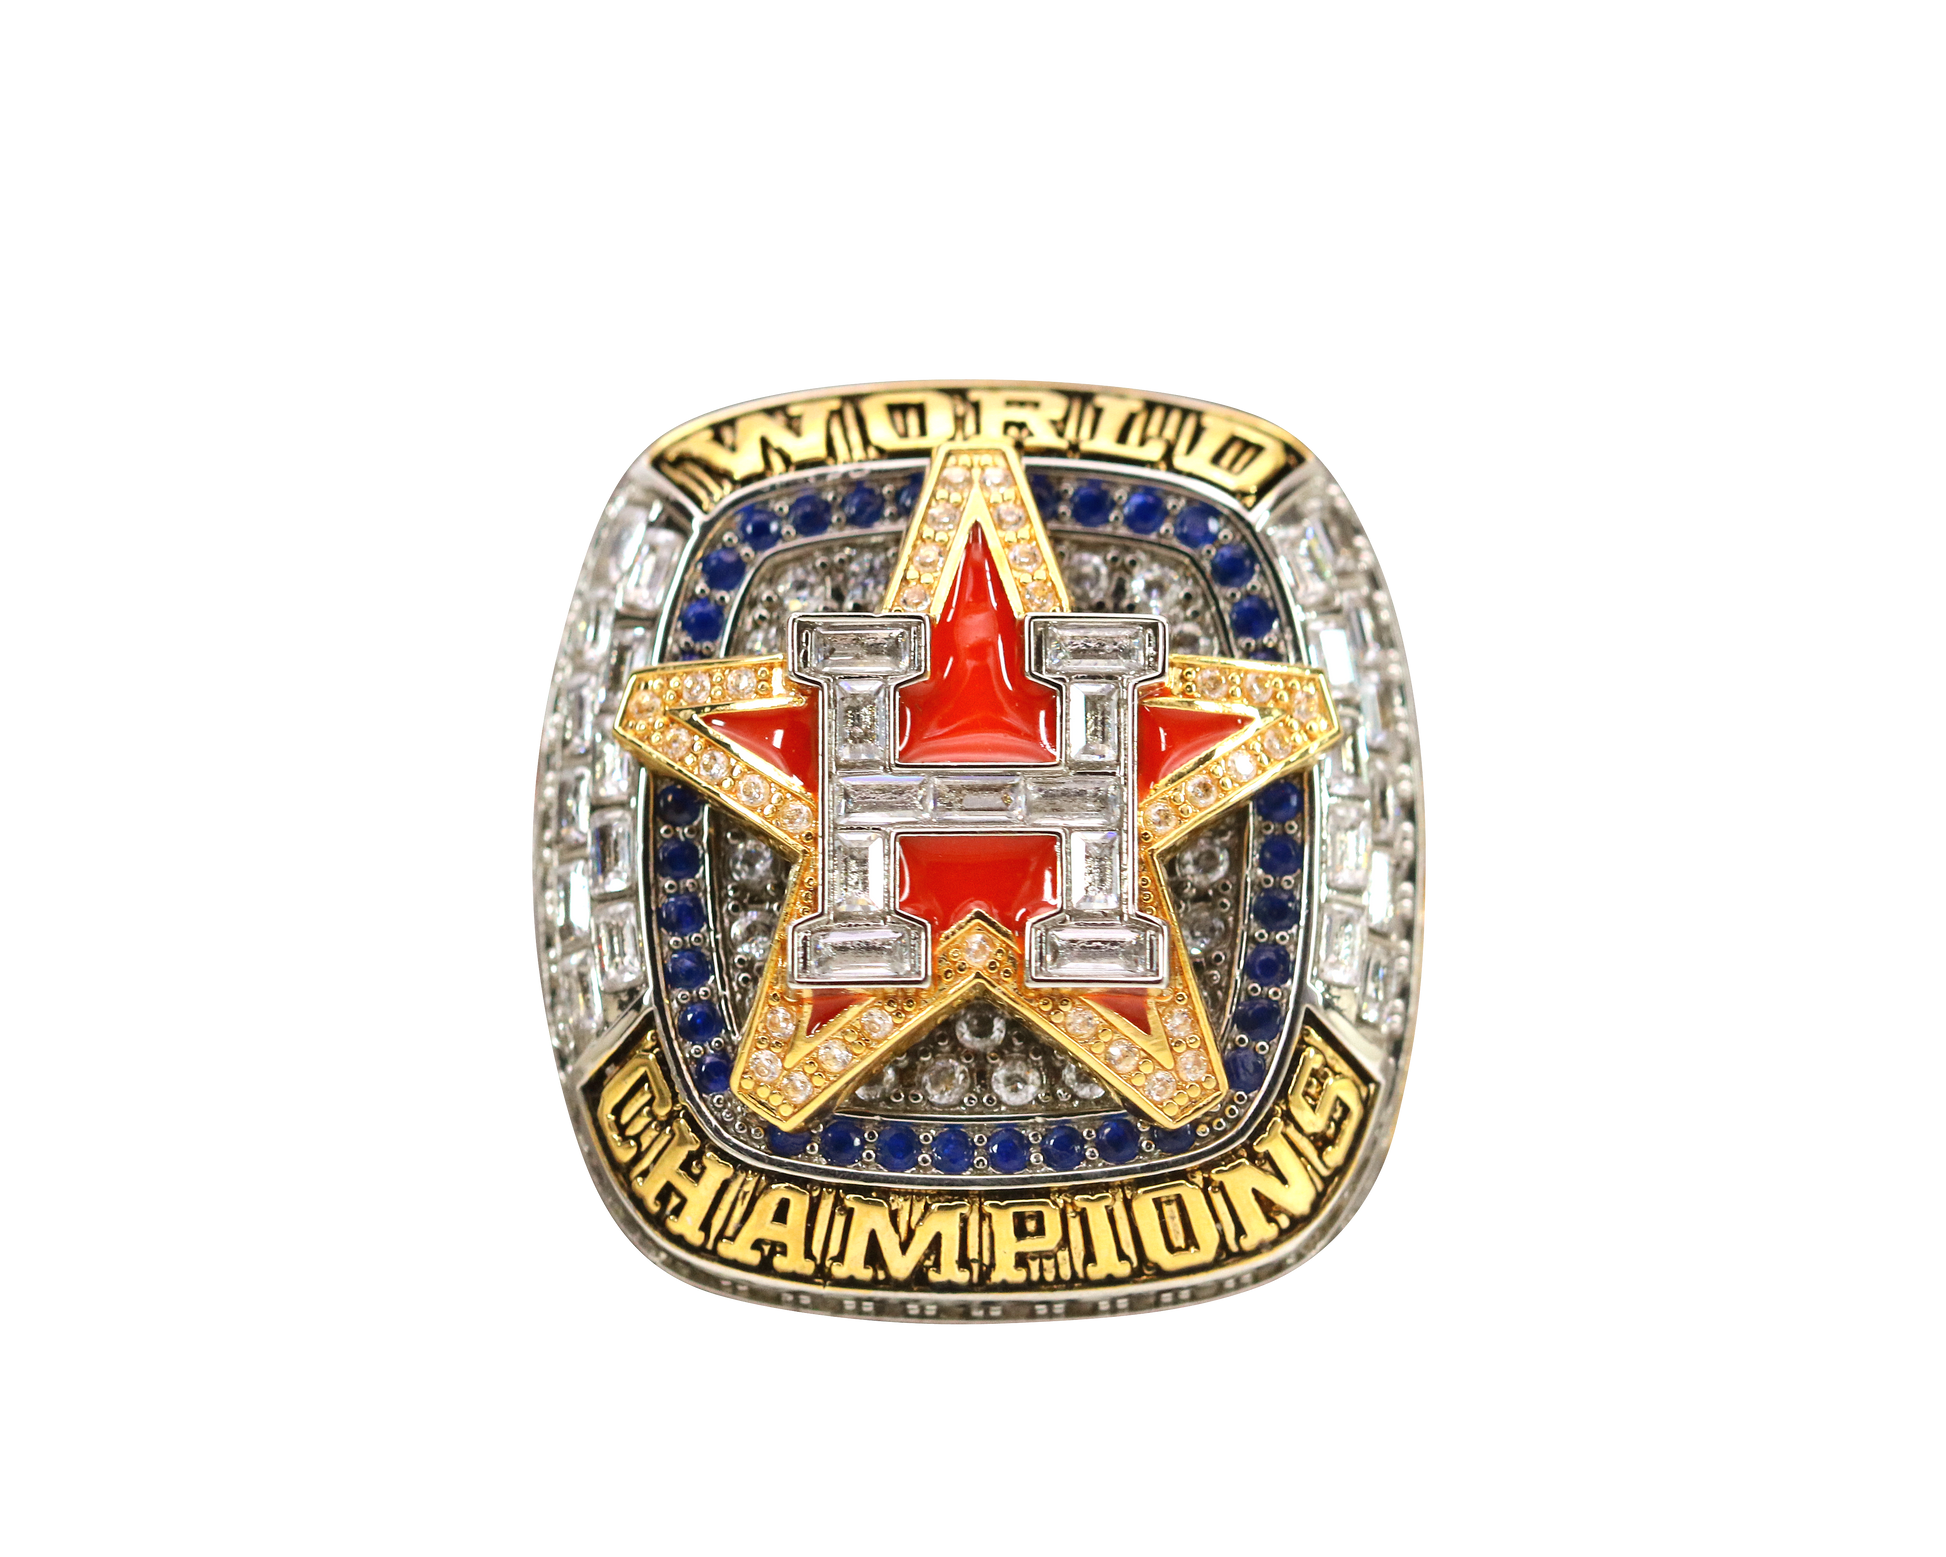 Houston Astros 2022 World Series championship ring